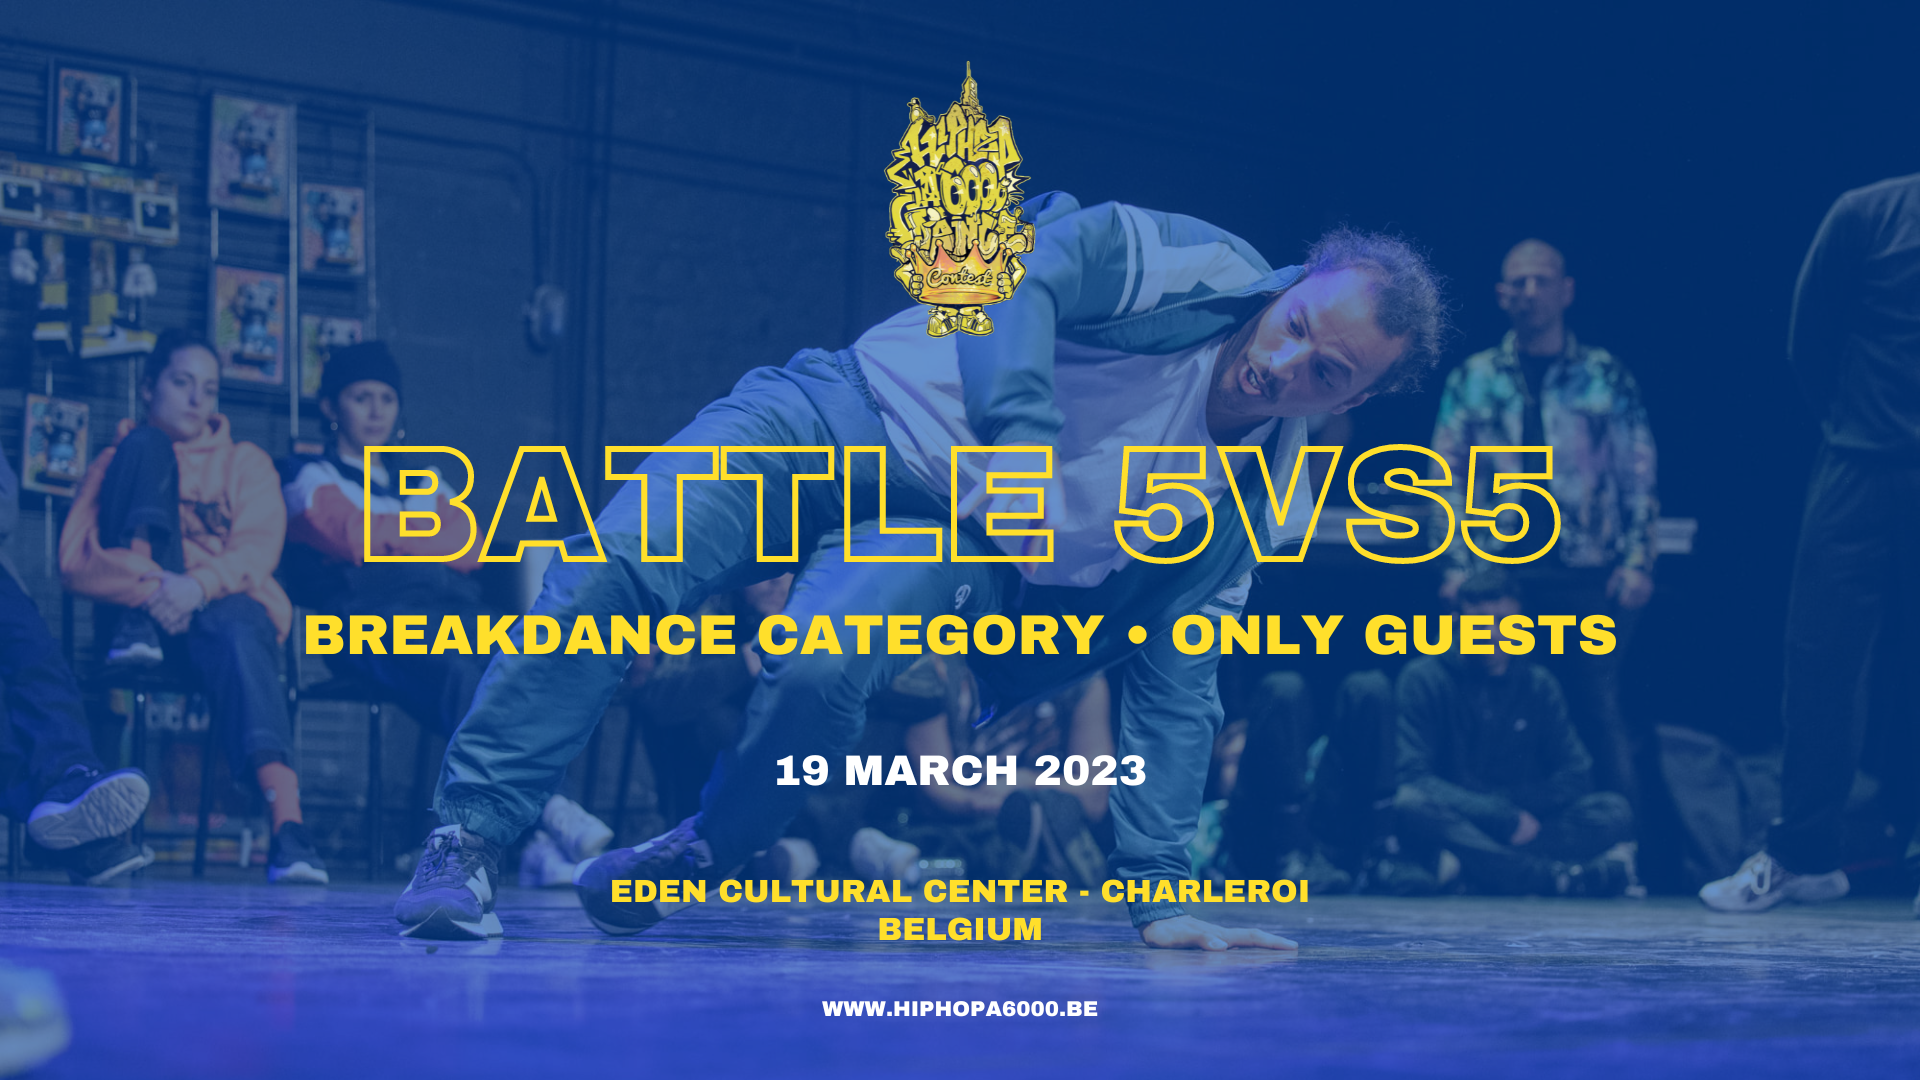 battle 5vs5 guest breakdance hha6000